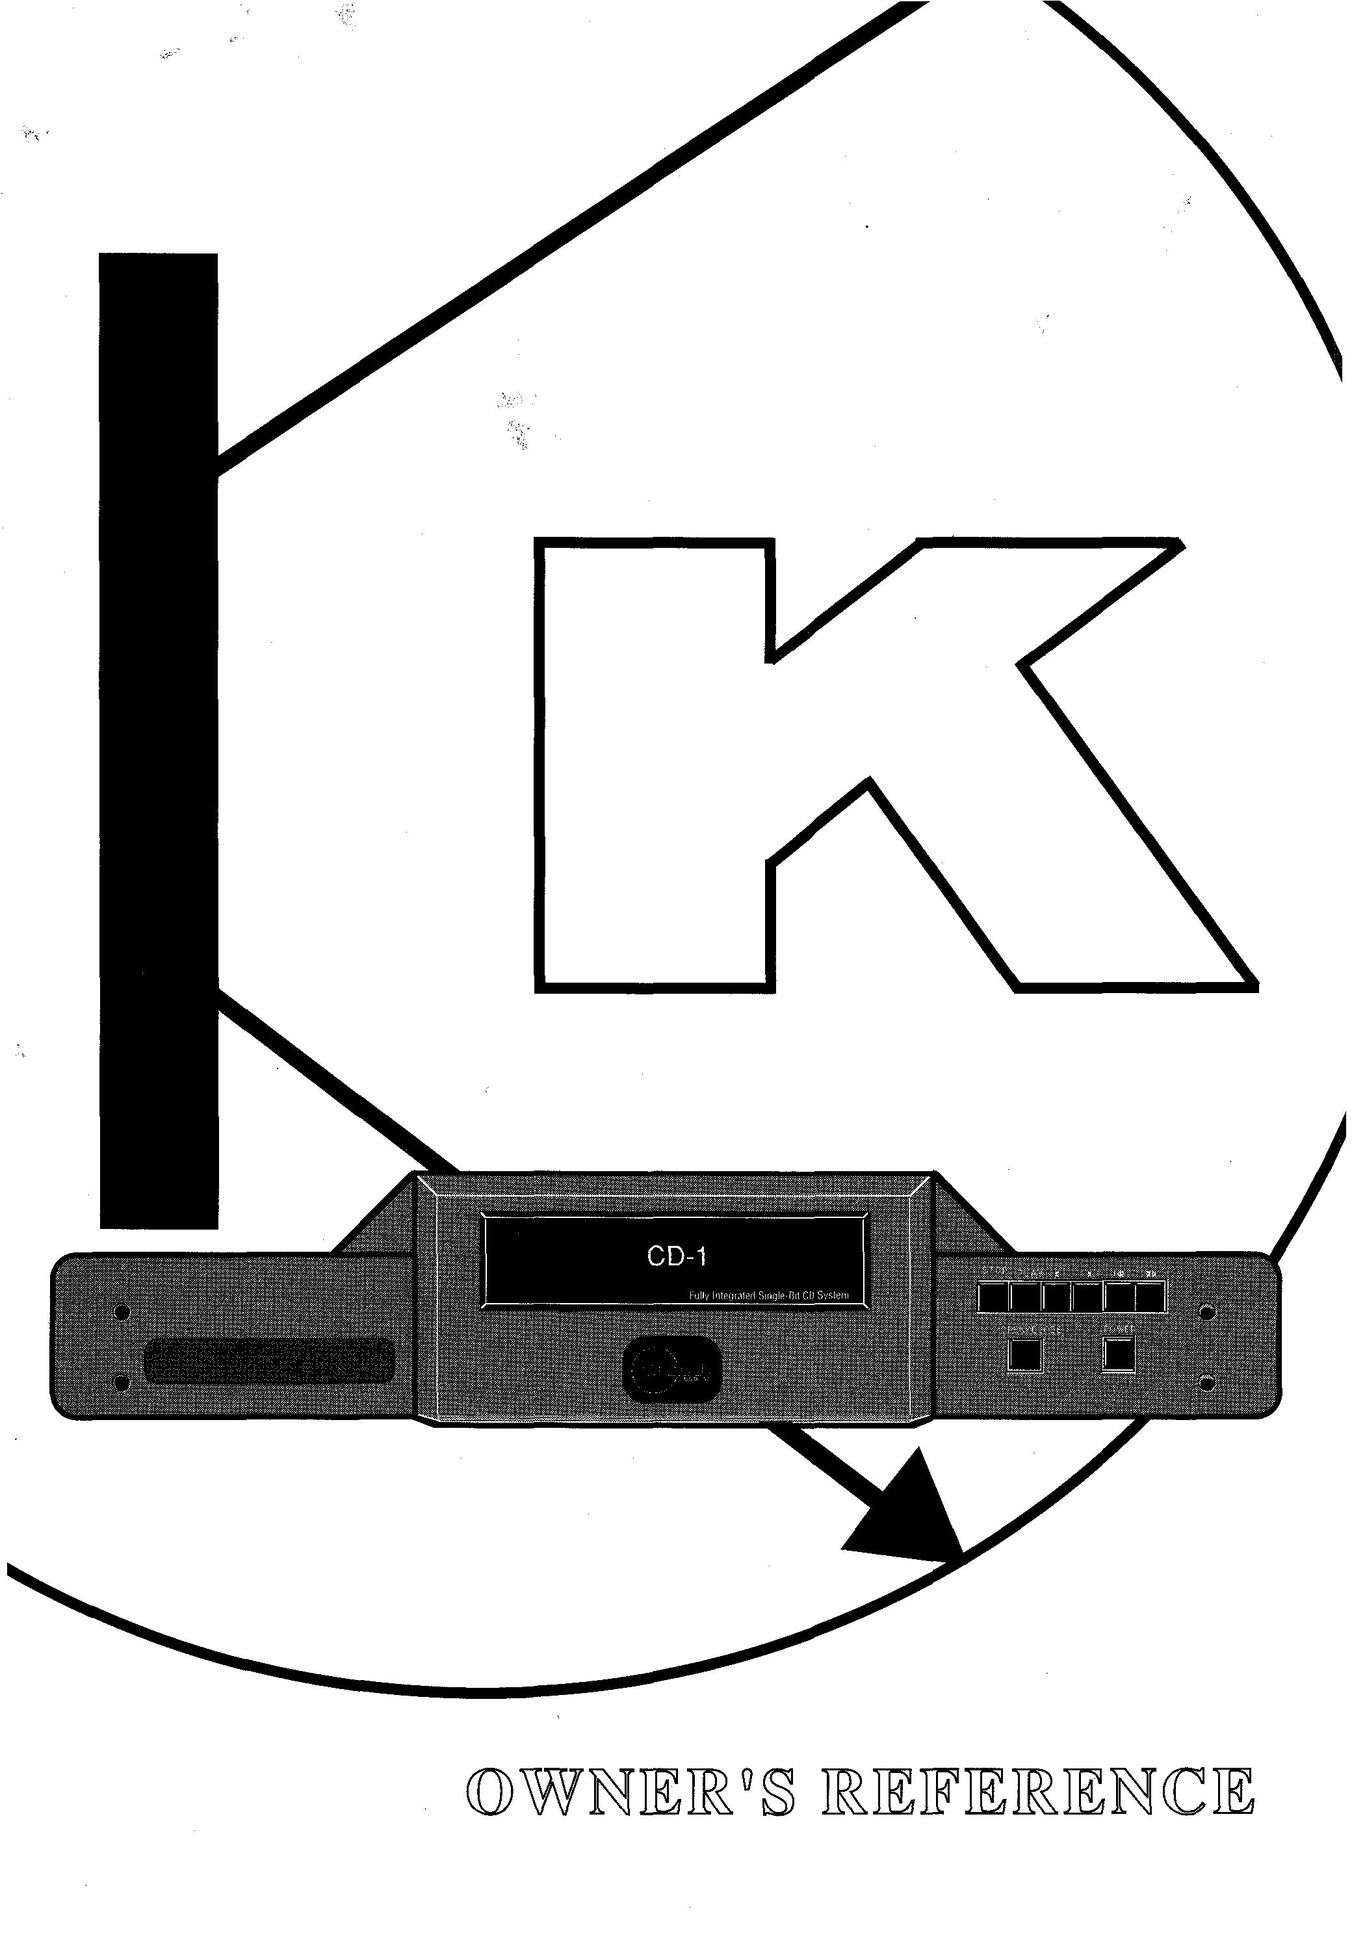 Krell Industries CD-1 CD Player User Manual